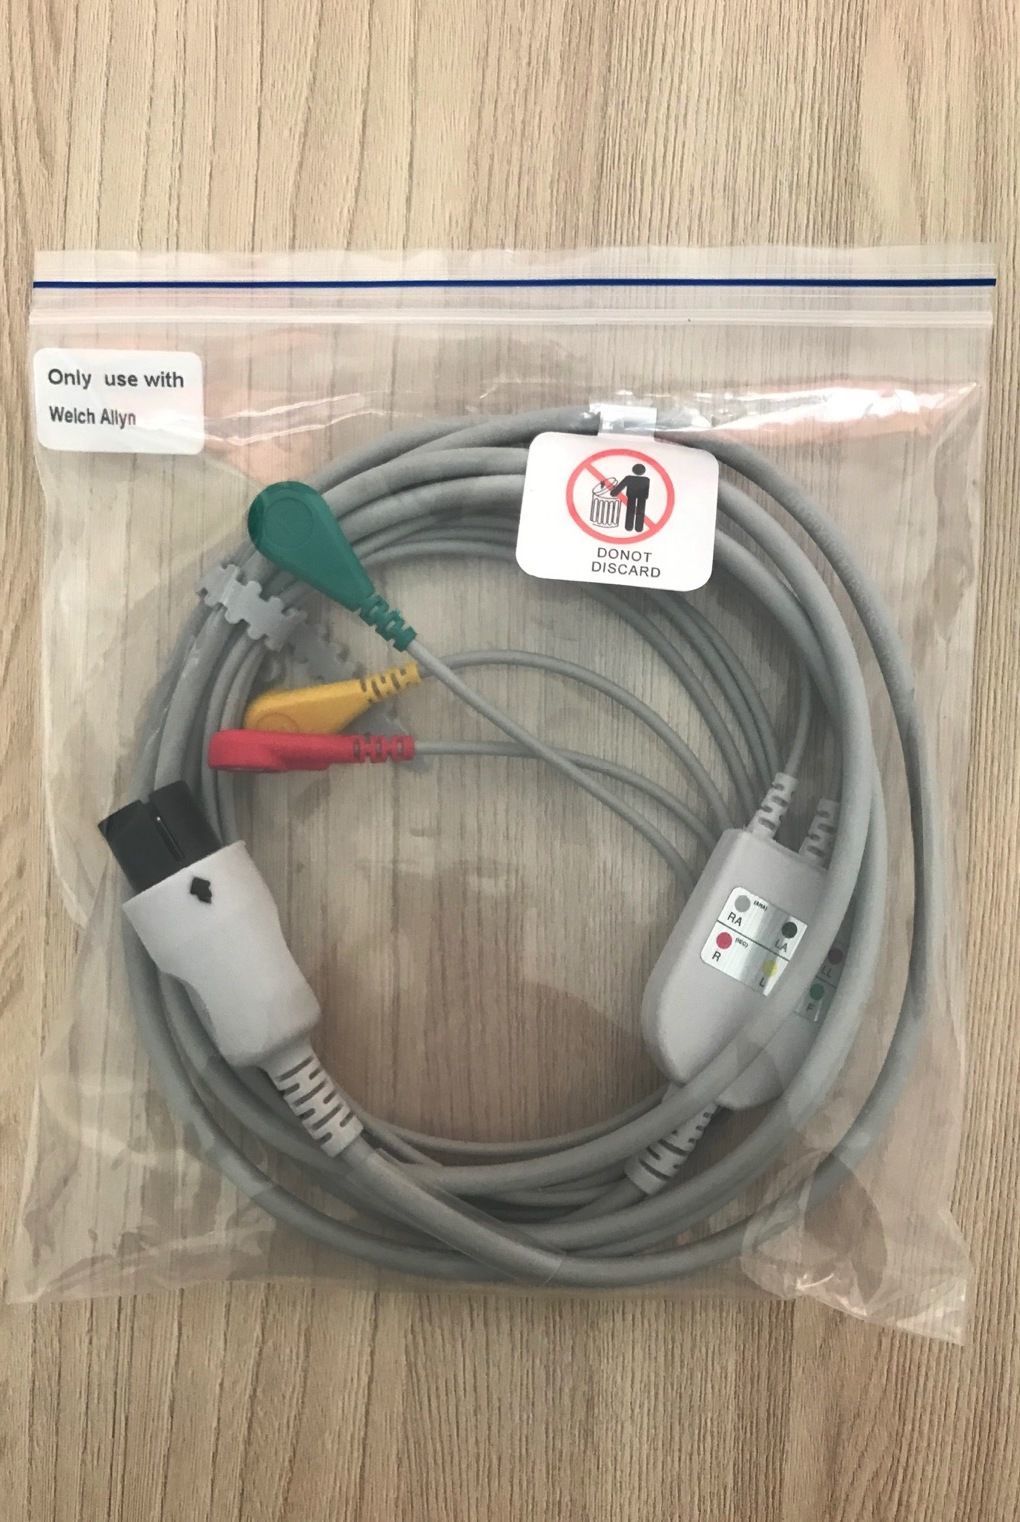 ECG 3 lead wire snap IEC cable for Vital Sign Monitor Welch Allyn_สายอีซีจีเคเบิ้ลสำหรับเครื่องมอนิเตอร์สัญญาณชีพผู้ป่วย Welch Allyn